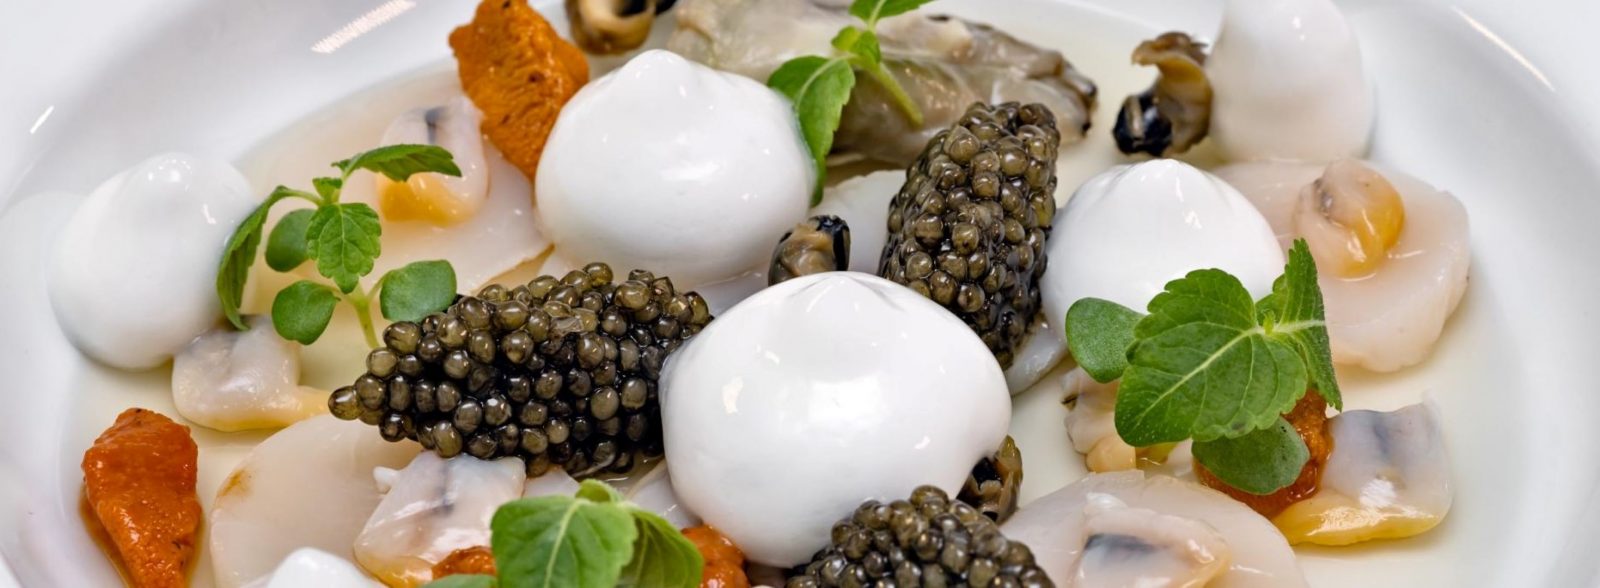 STJ_Caviar-Oscietre-grand-cru-Scallops-pittige-raws–And-shellfish-au-naturel-sorbet-lime-refreshed-with-a-Gin-Tonic-Rights-Nicolas-Claris–4- (2 )